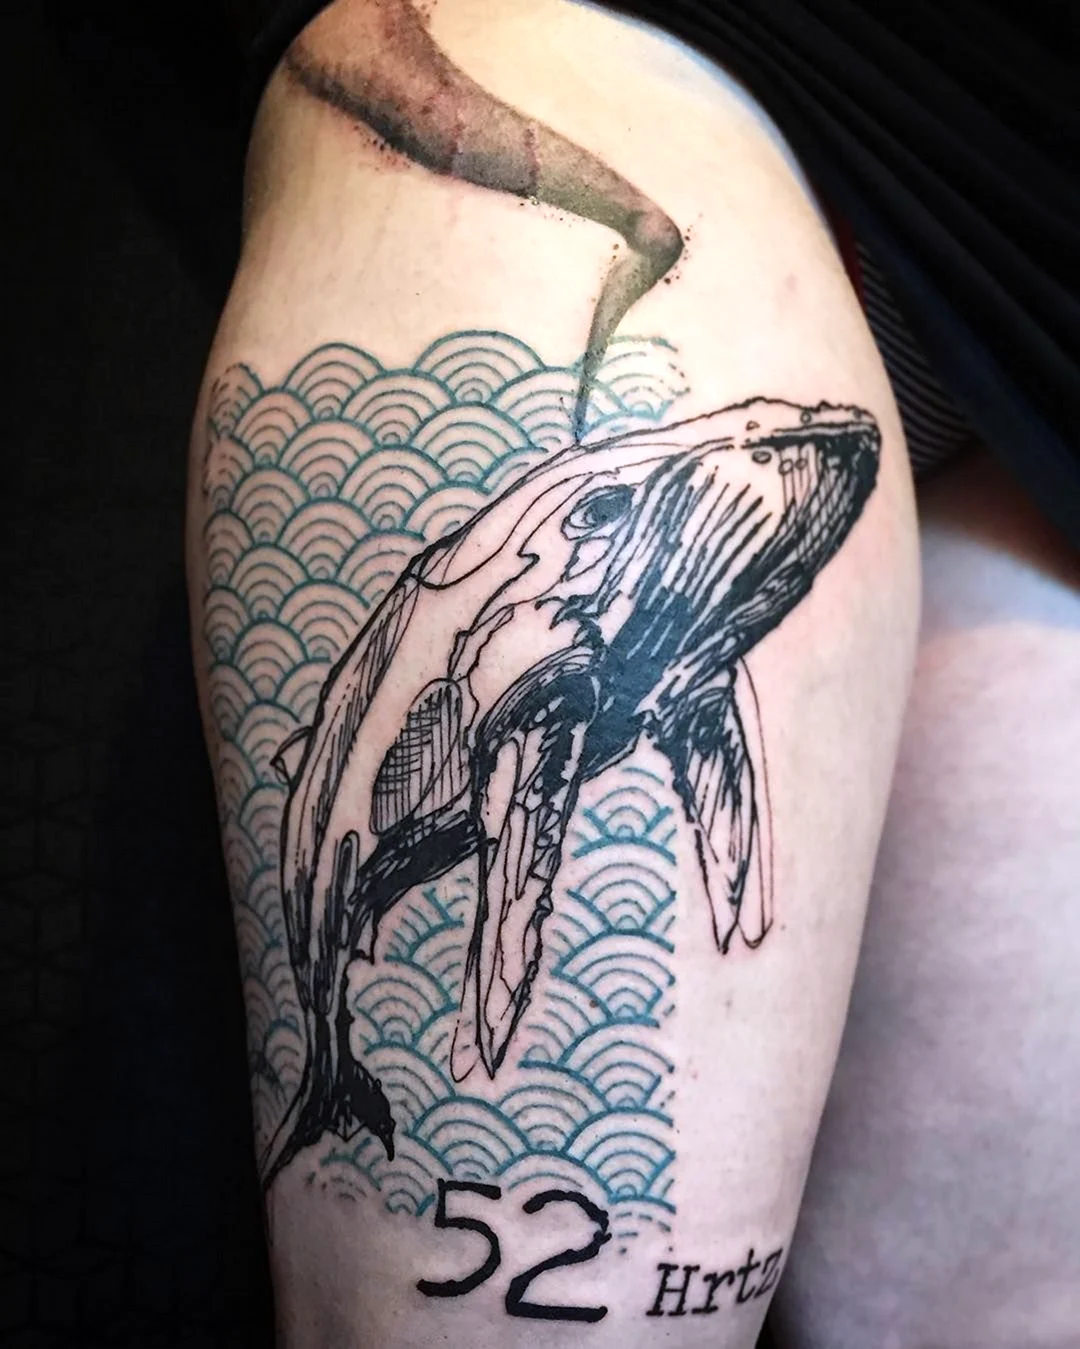 52 Hertz Whale Tattoo